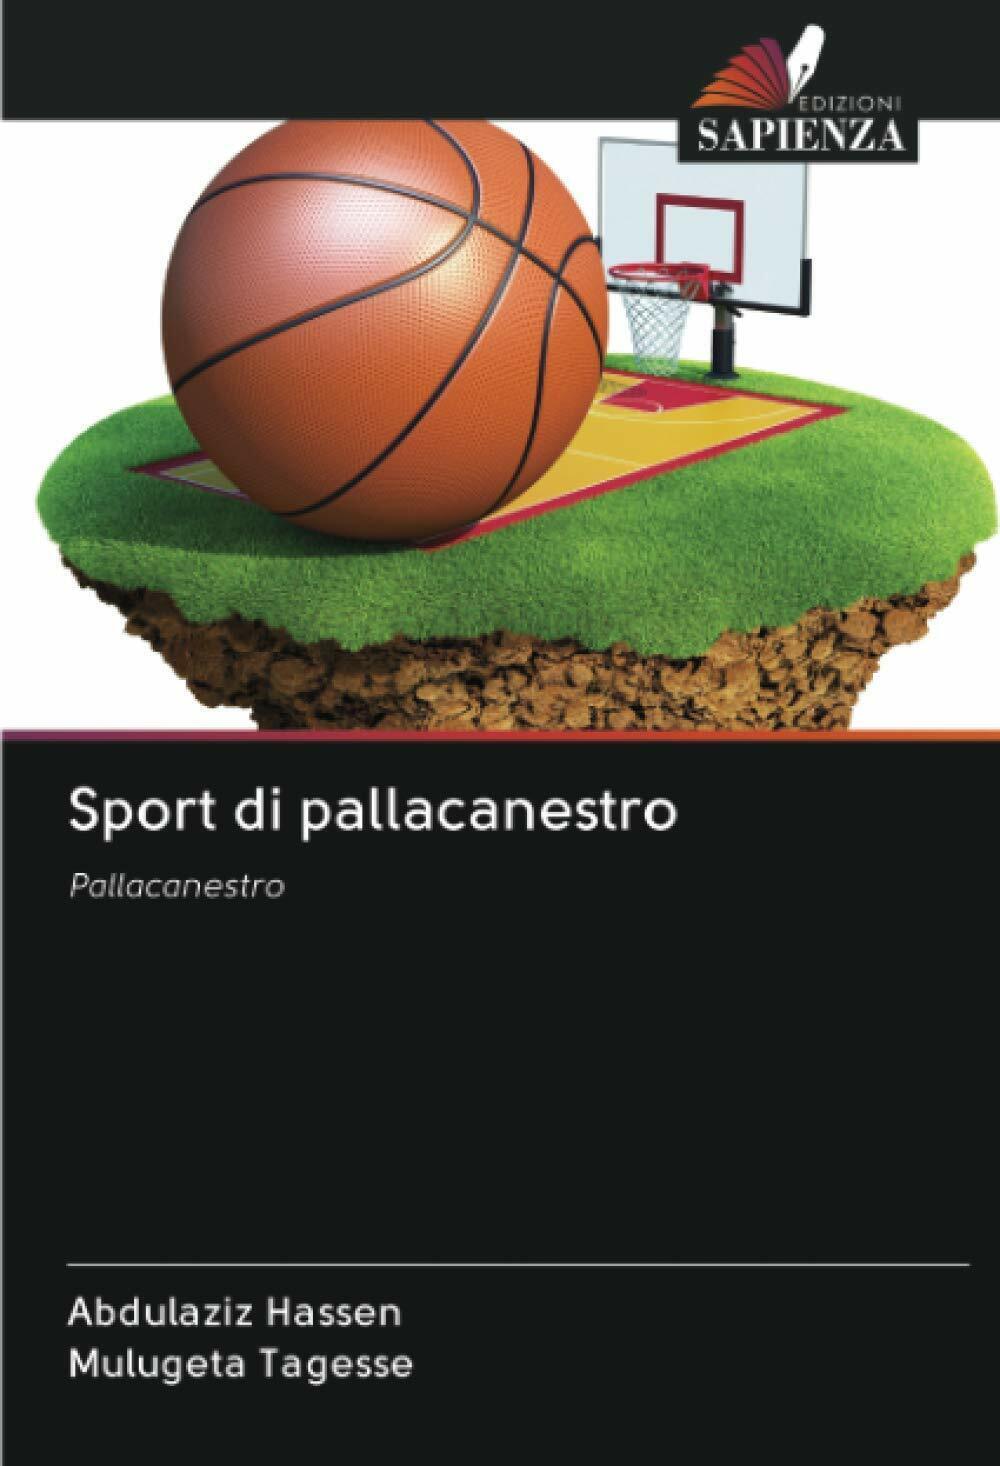 Sport di pallacanestro - Abdulaziz Hassen, Mulugeta Tagesse - Sapienza, 2020